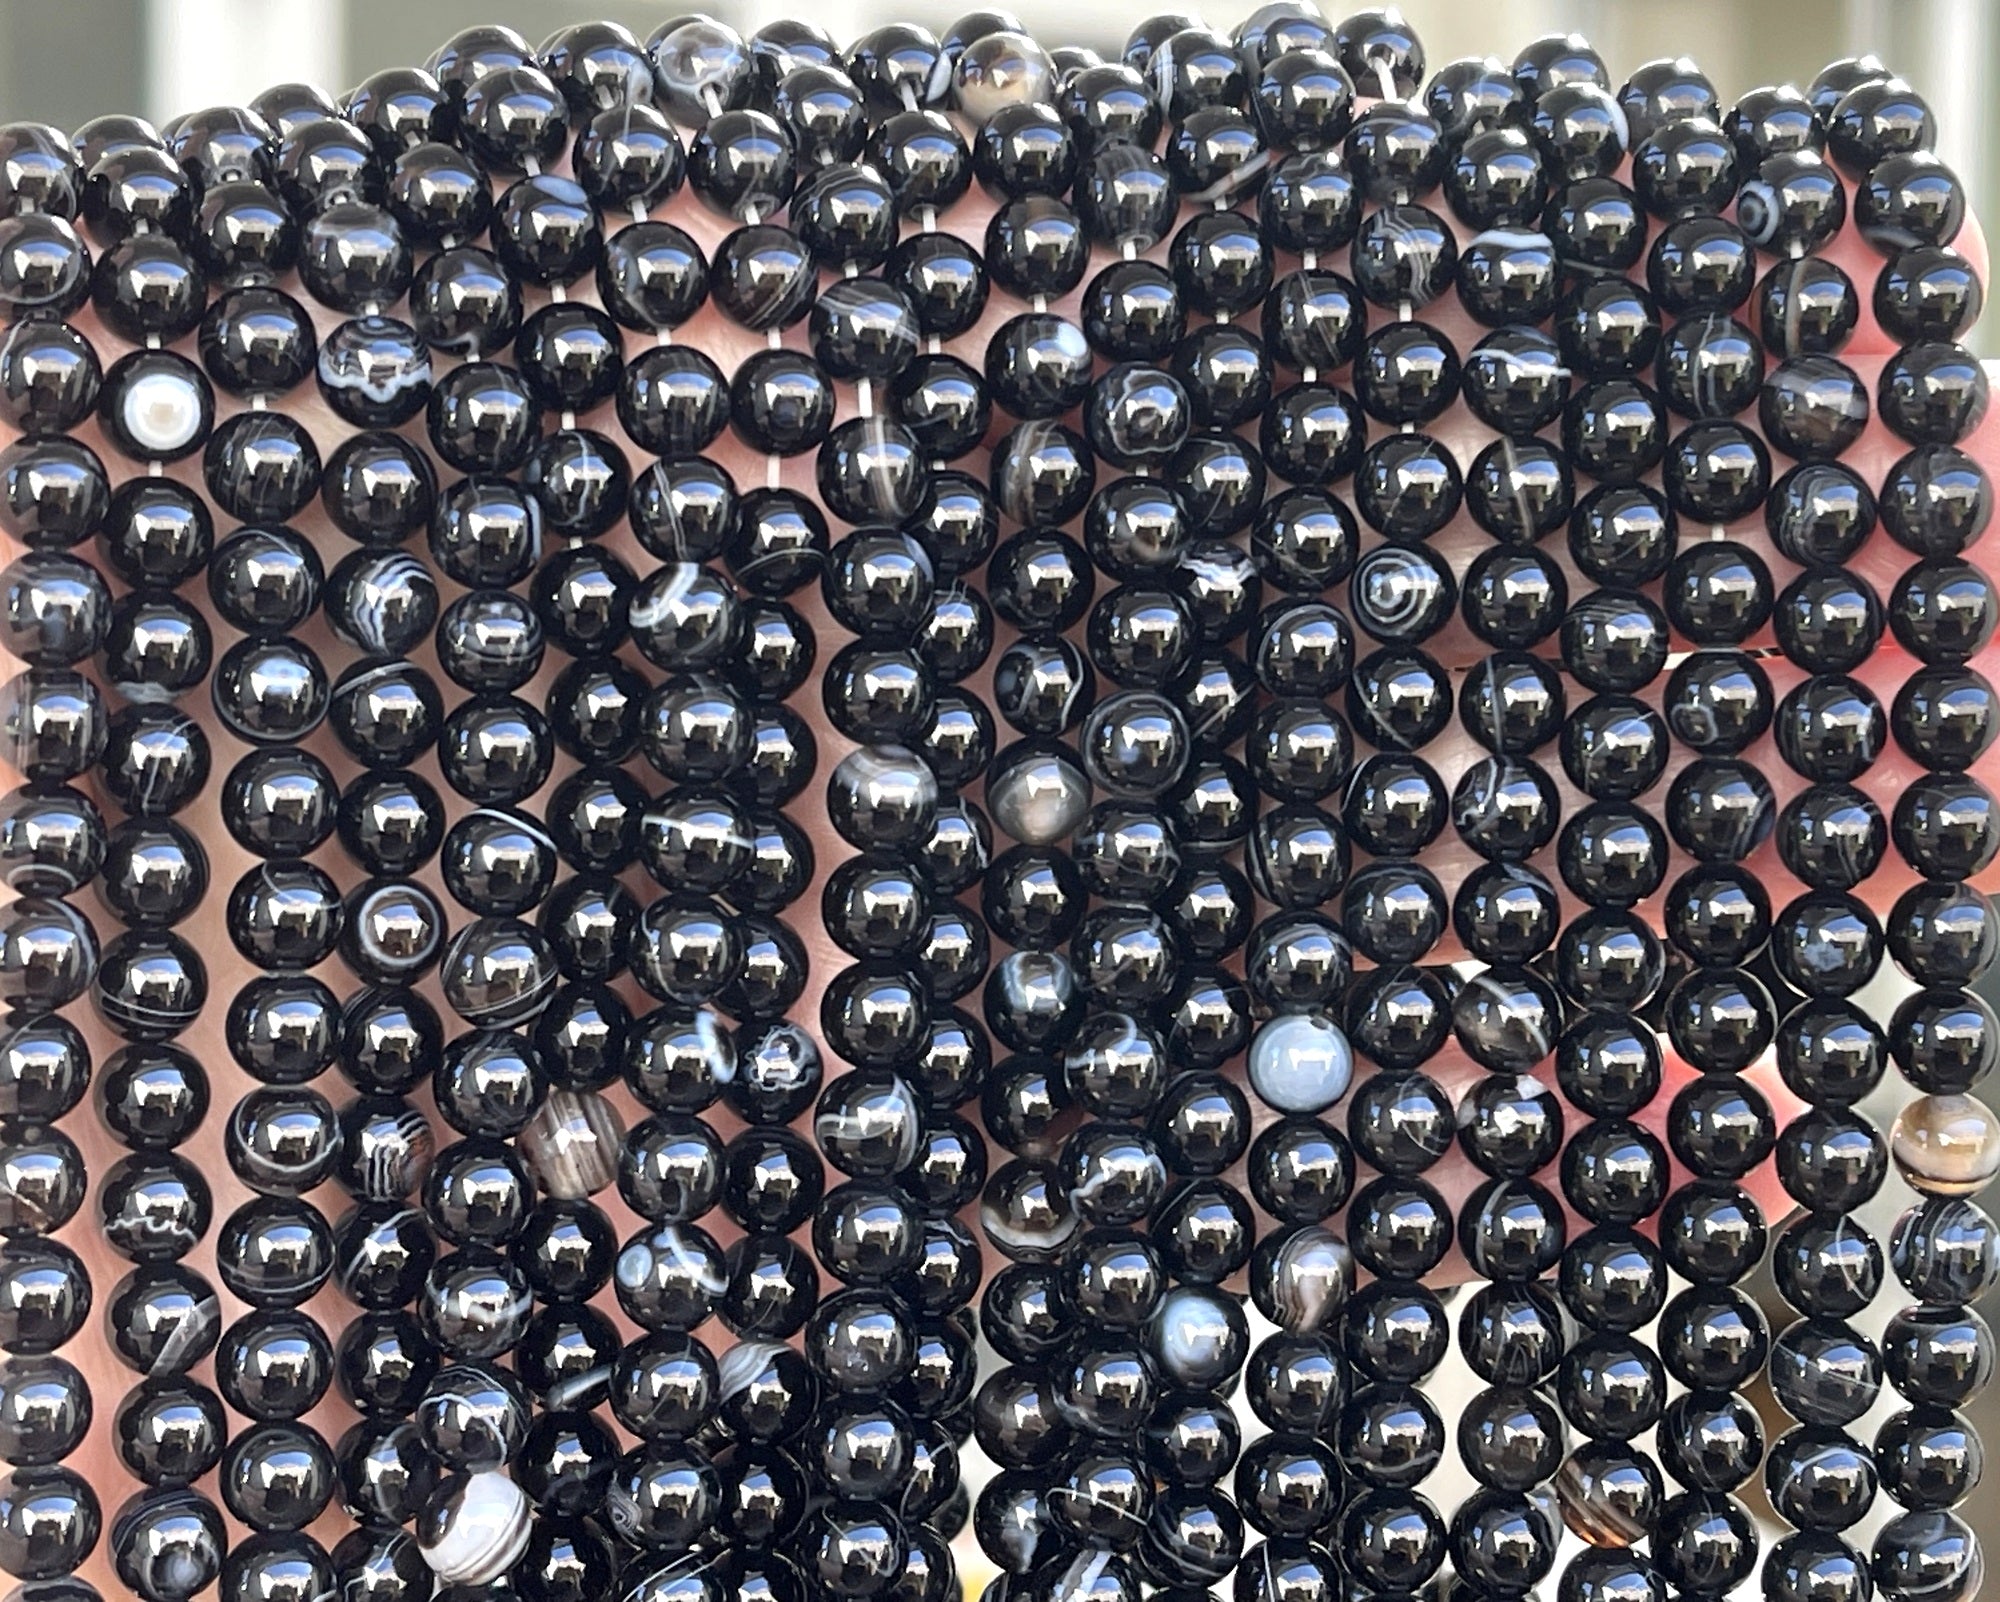 Black Banded Agate 6mm round gemstone beads 15.5" strand